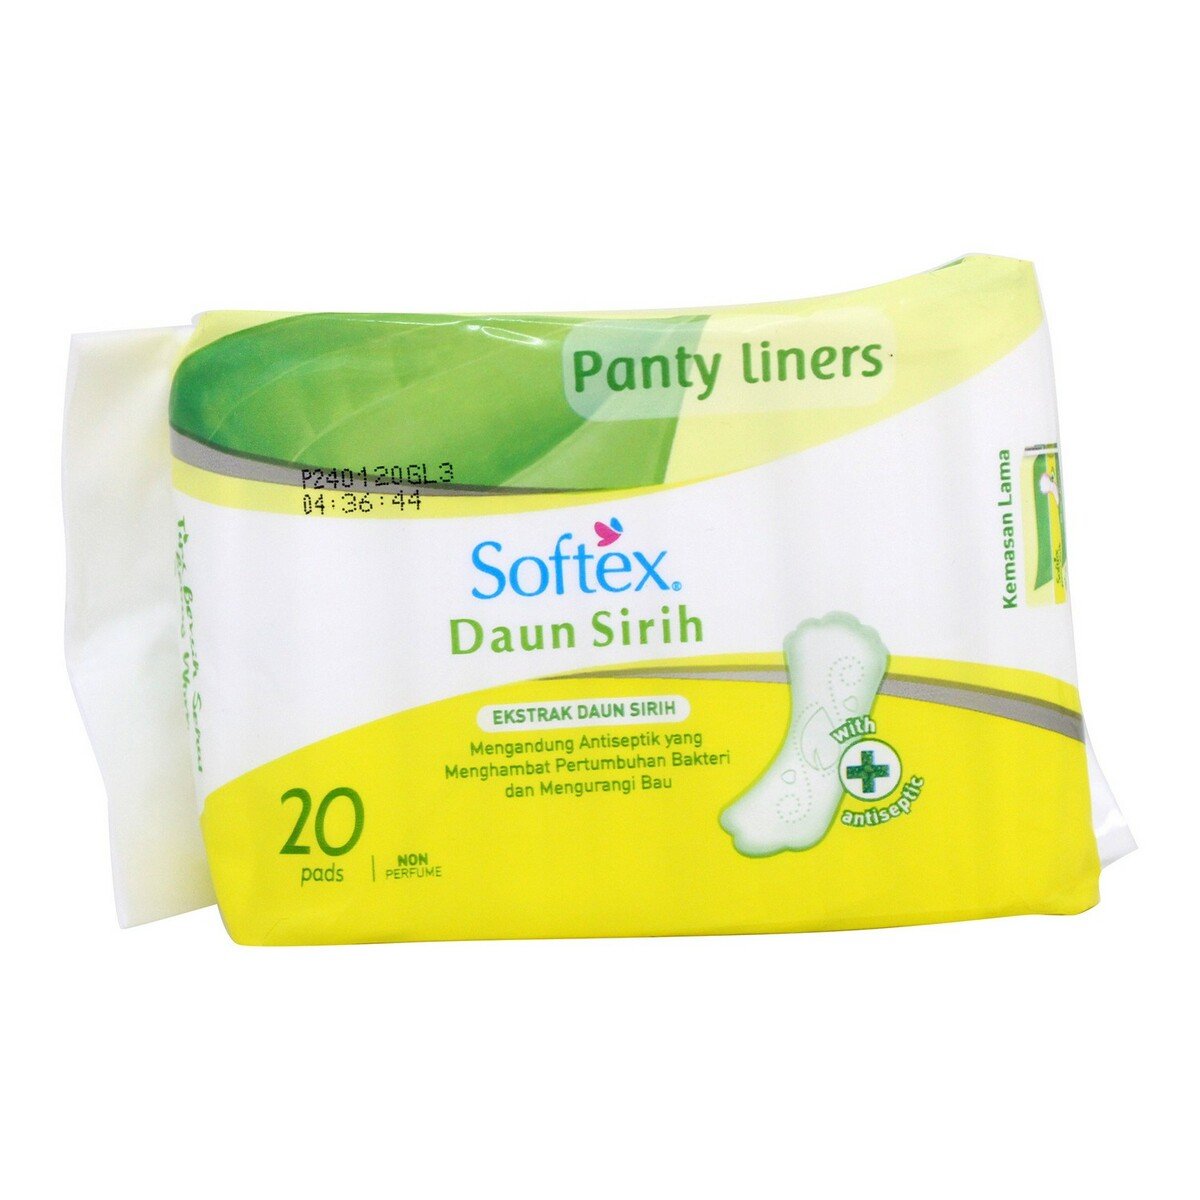 Softex Panty Liners Daun Sirih 20pcs